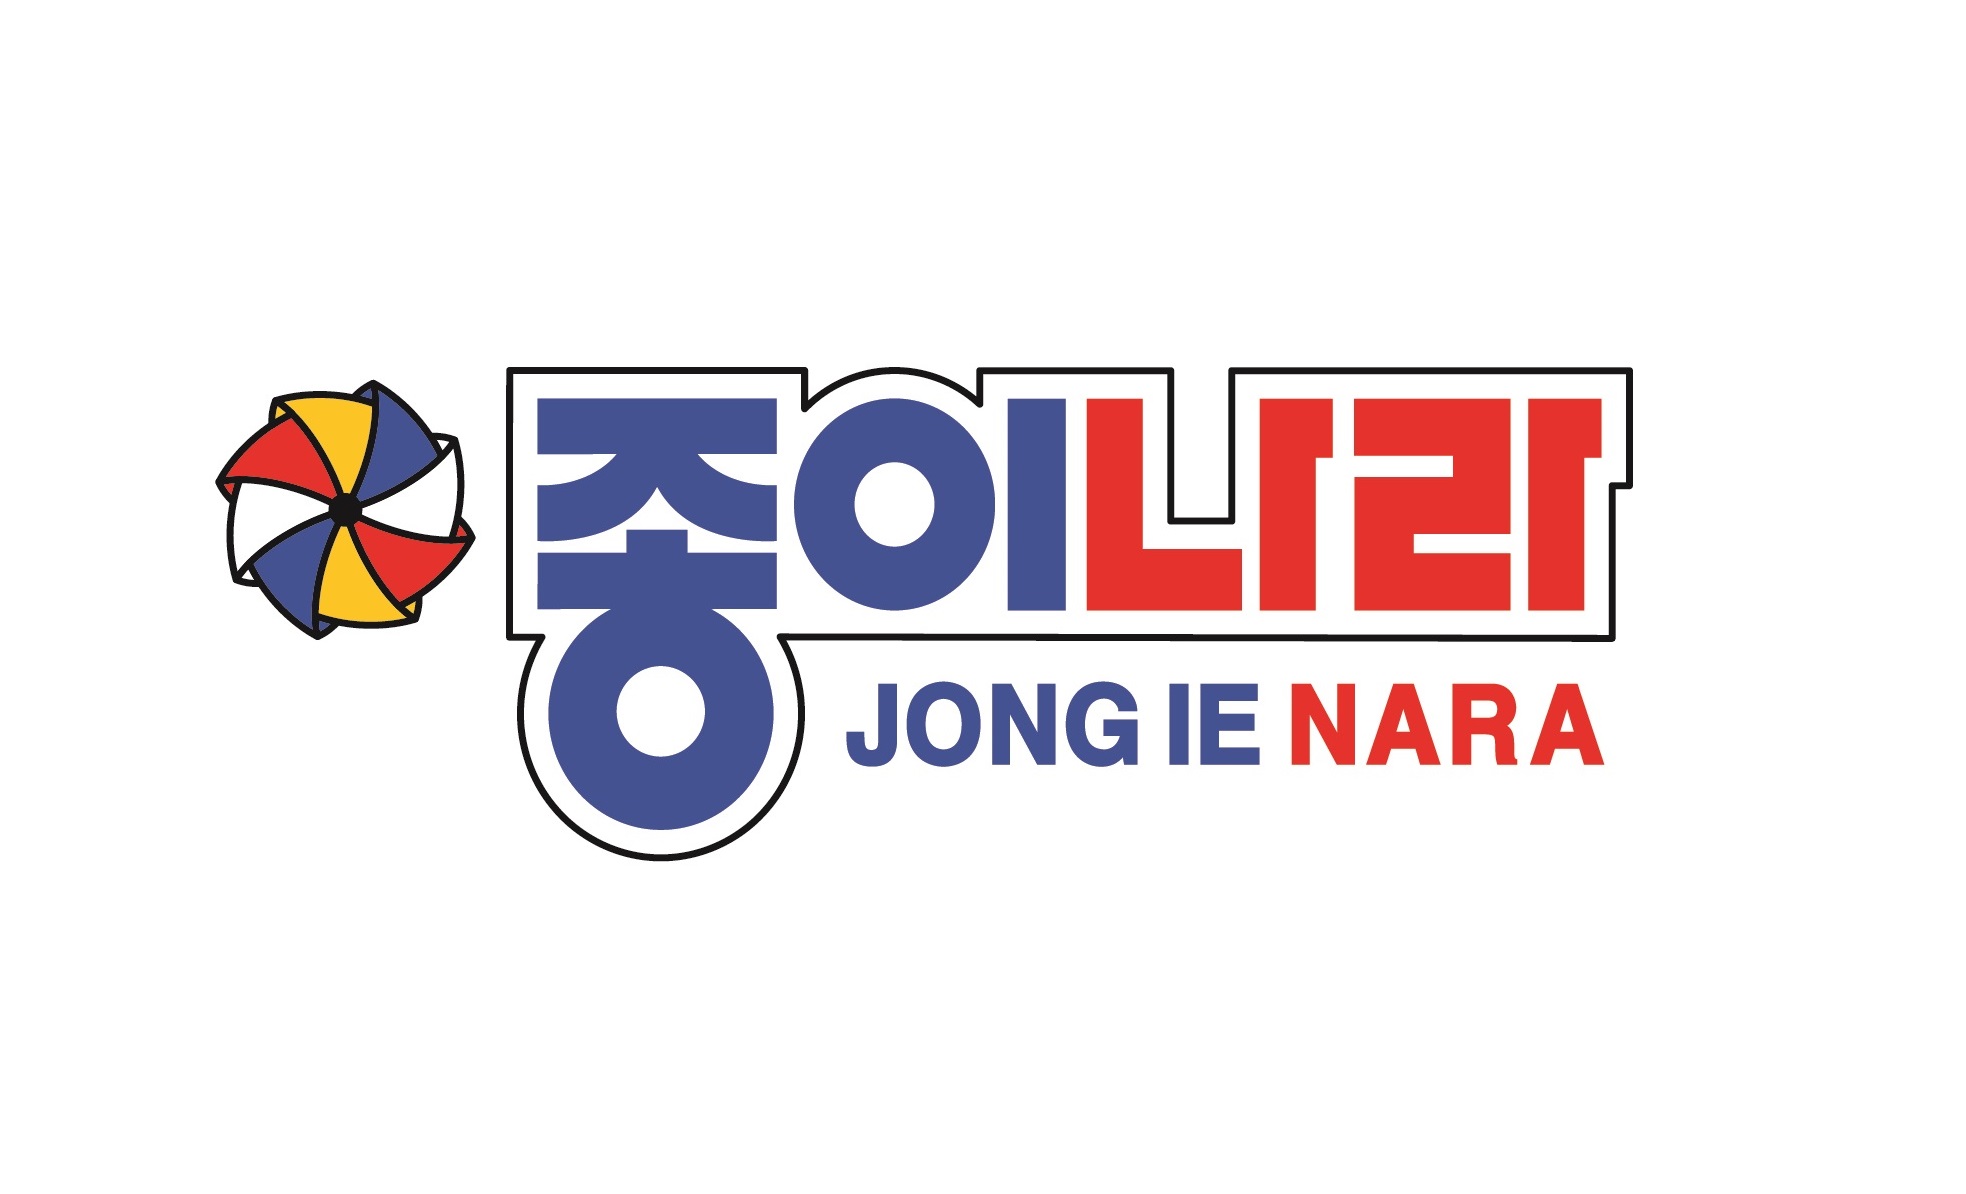 Jong Ie Nara logo